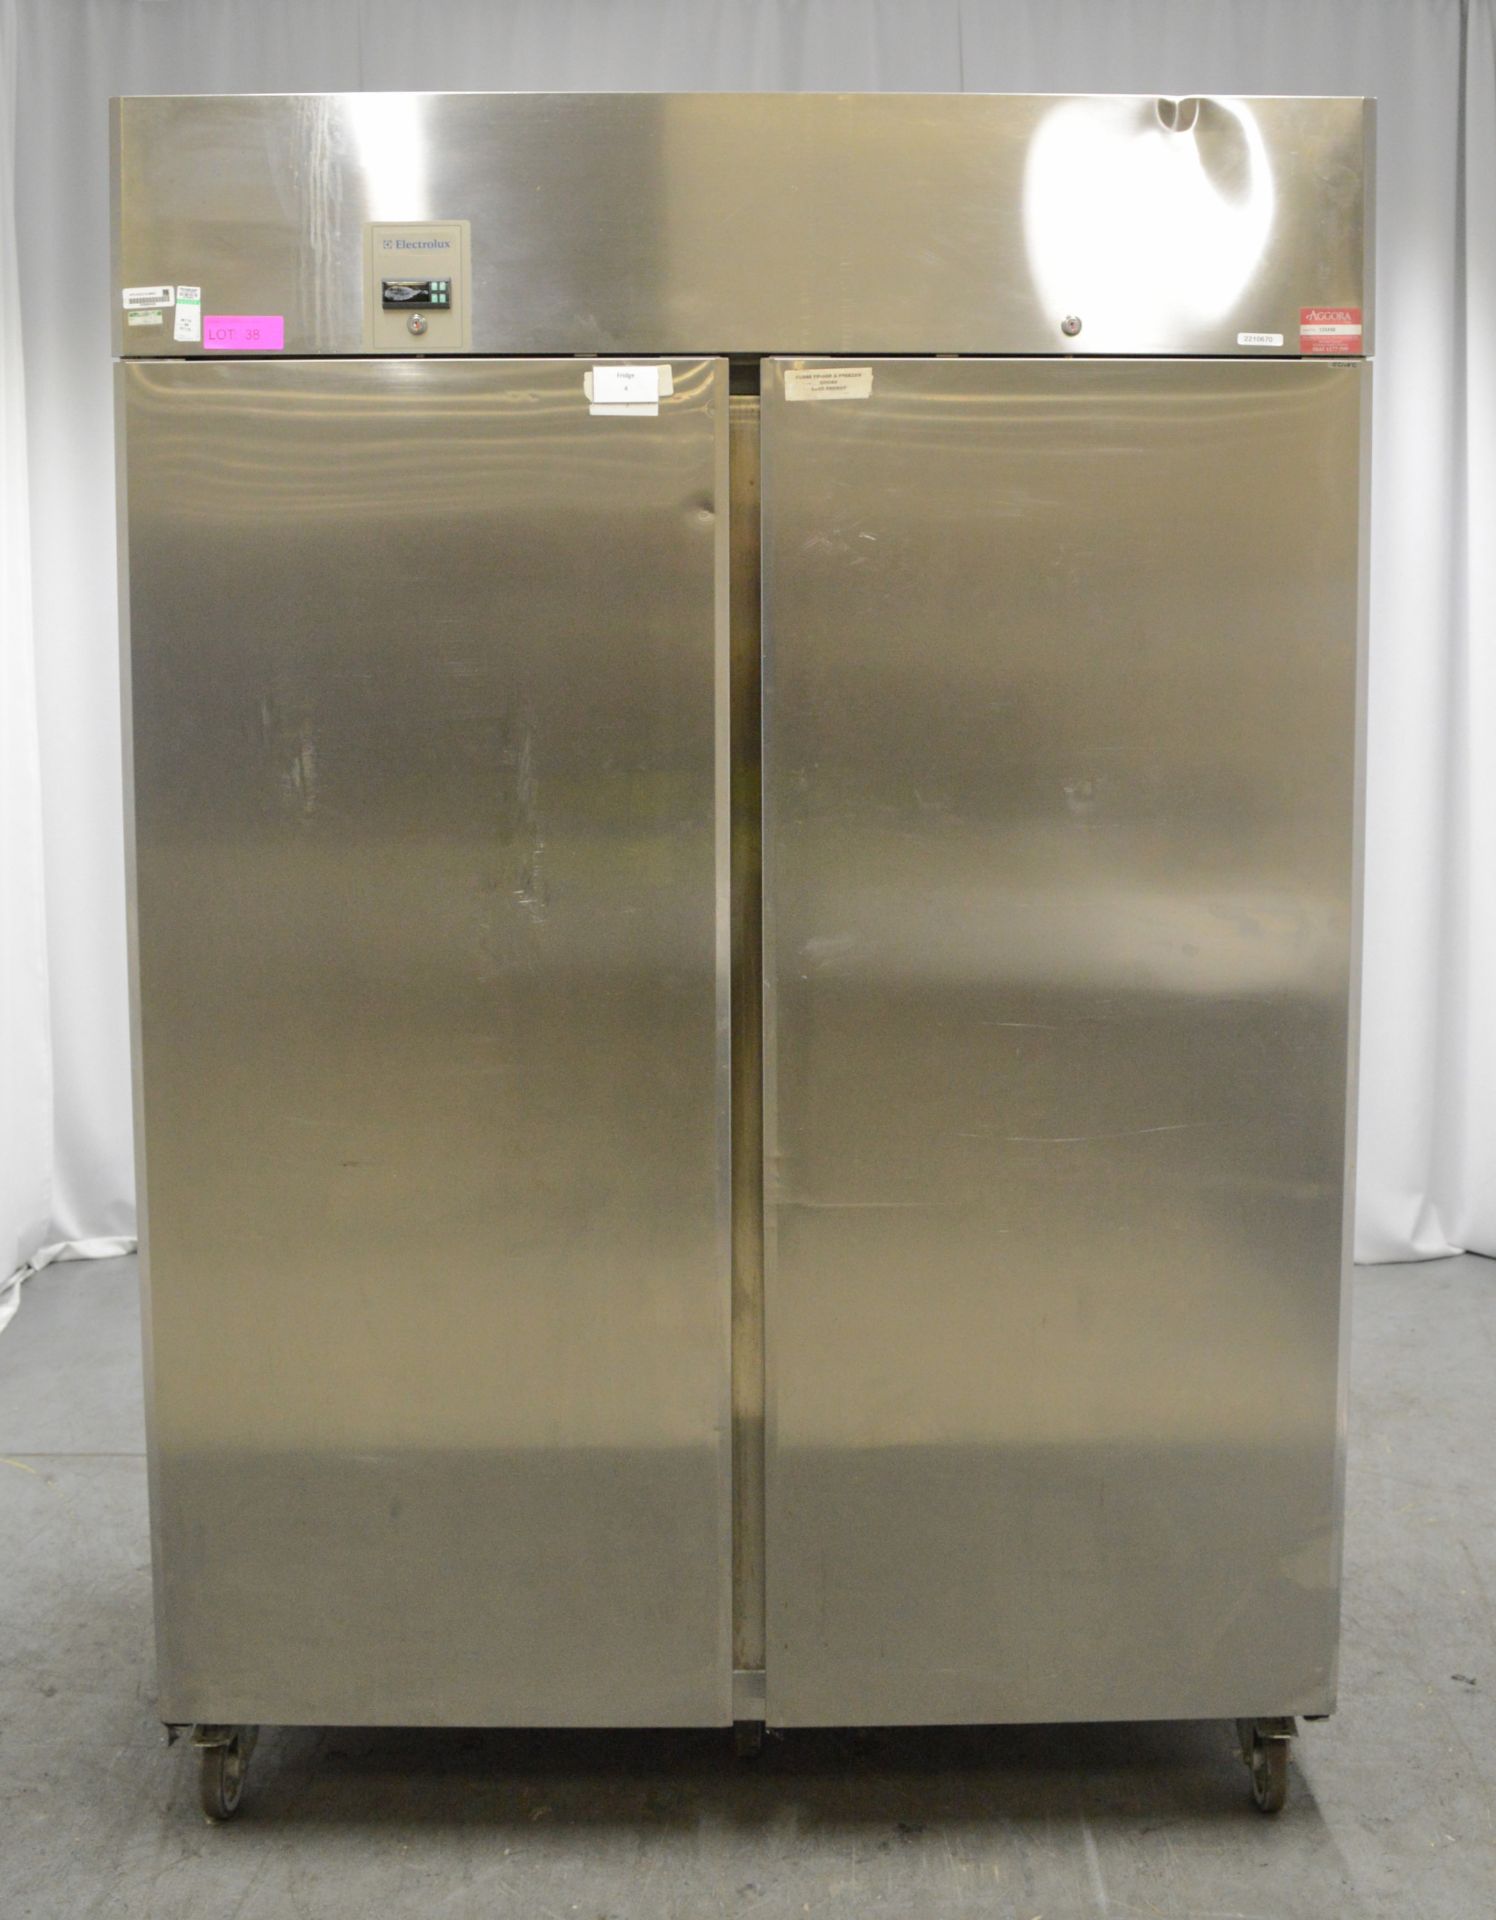 Electrolux RE4142F double door fridge, 1 phase electric